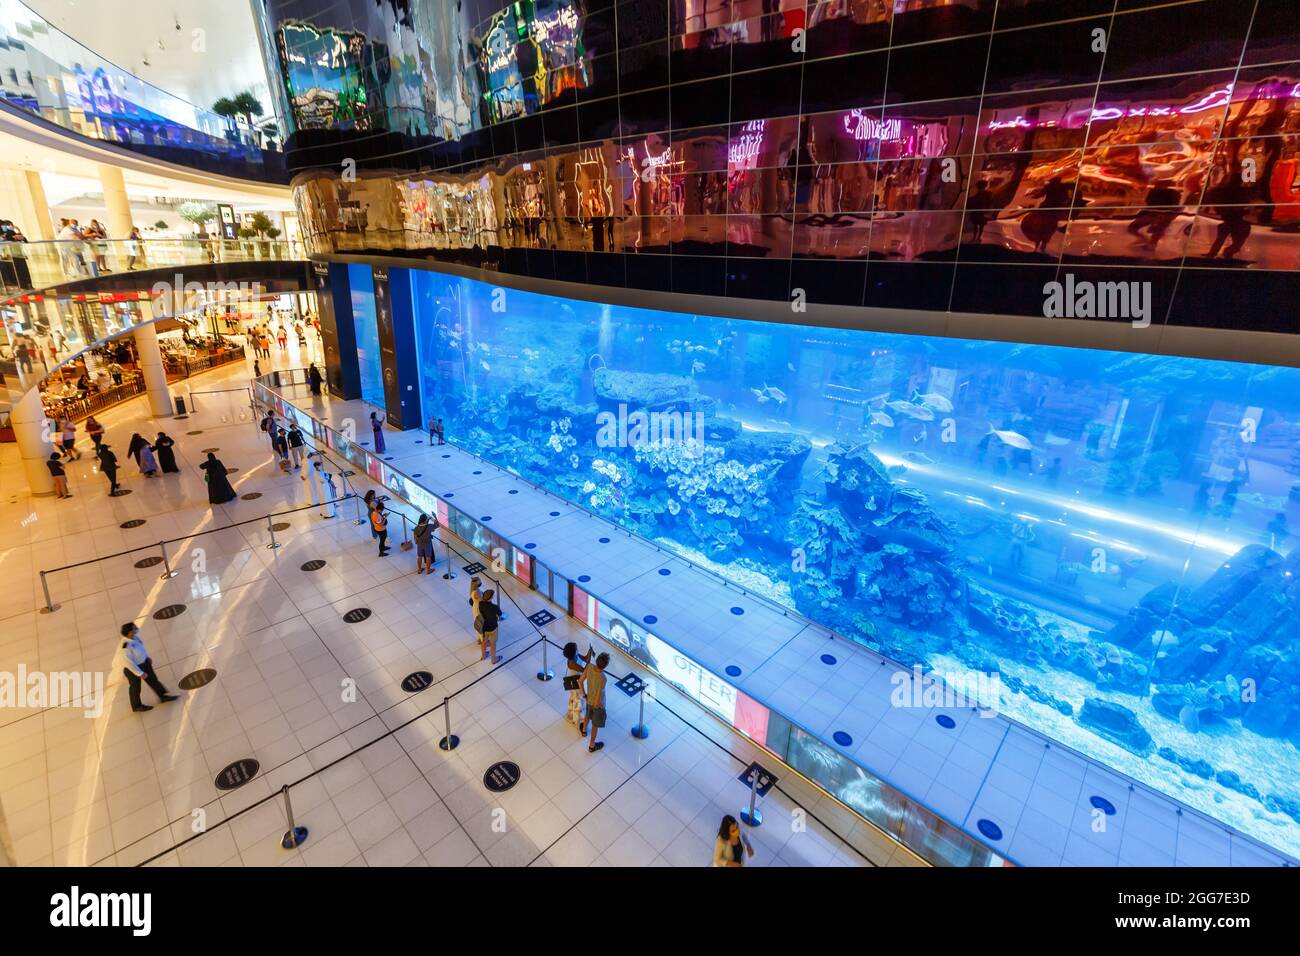 Dubai, United Arab Emirates - May 27, 2021: Dubai Mall Aquarium Luxury Shopping Center in Dubai, United Arab Emirates. Stock Photo